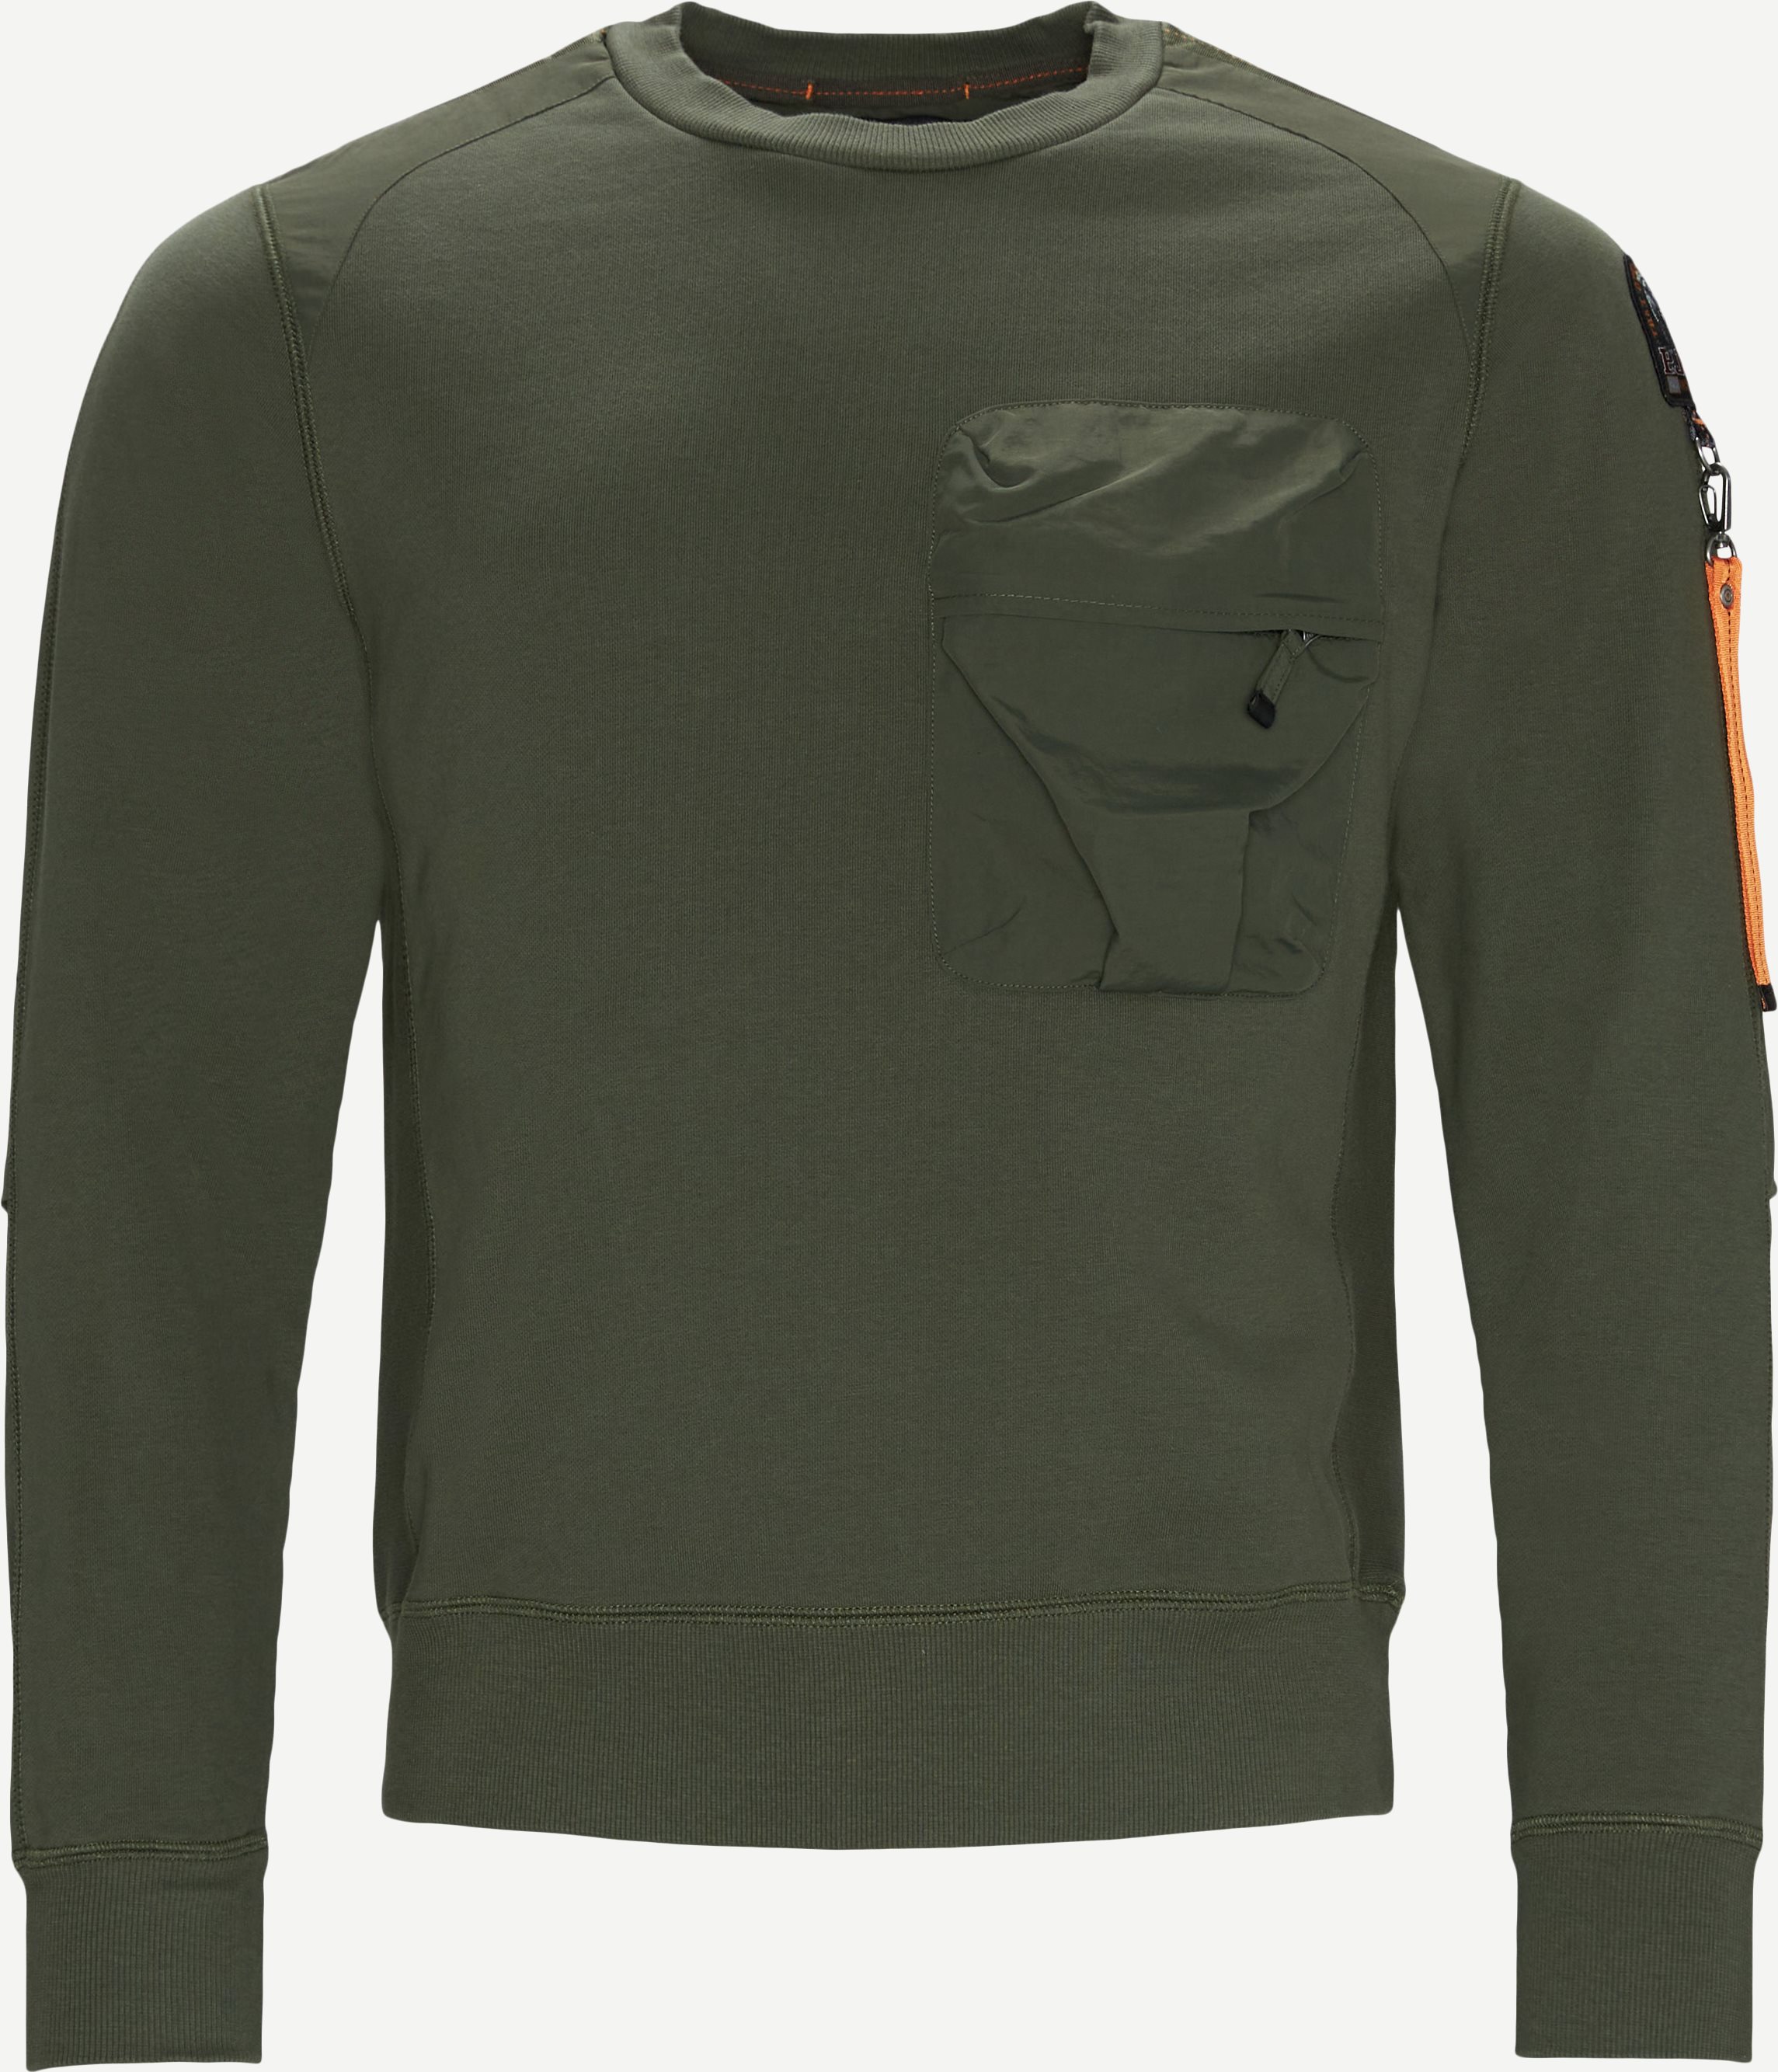 Saber SweatShirt - Sweatshirts - Regular fit - Army